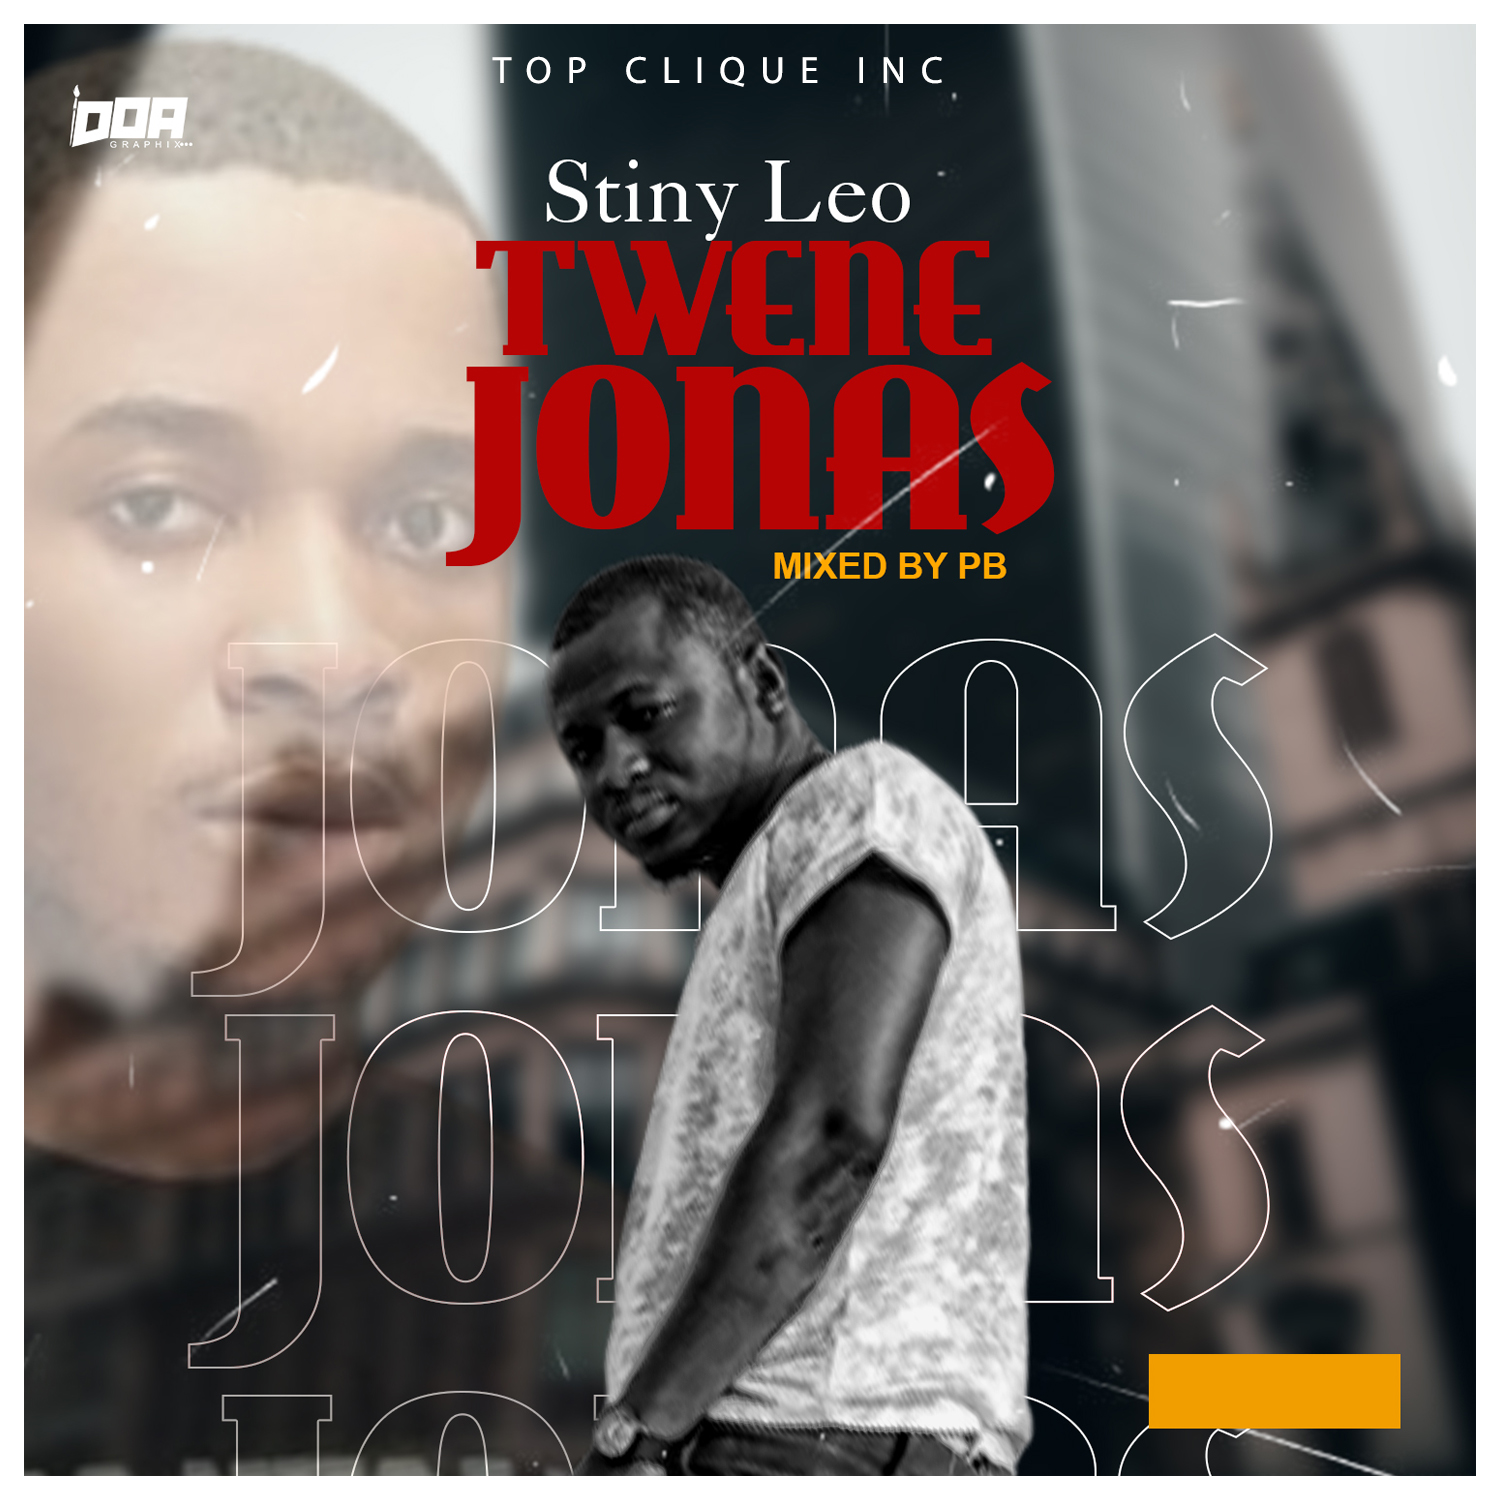 Stiny Leo - Twene Jonas (Mixed By PB) 1